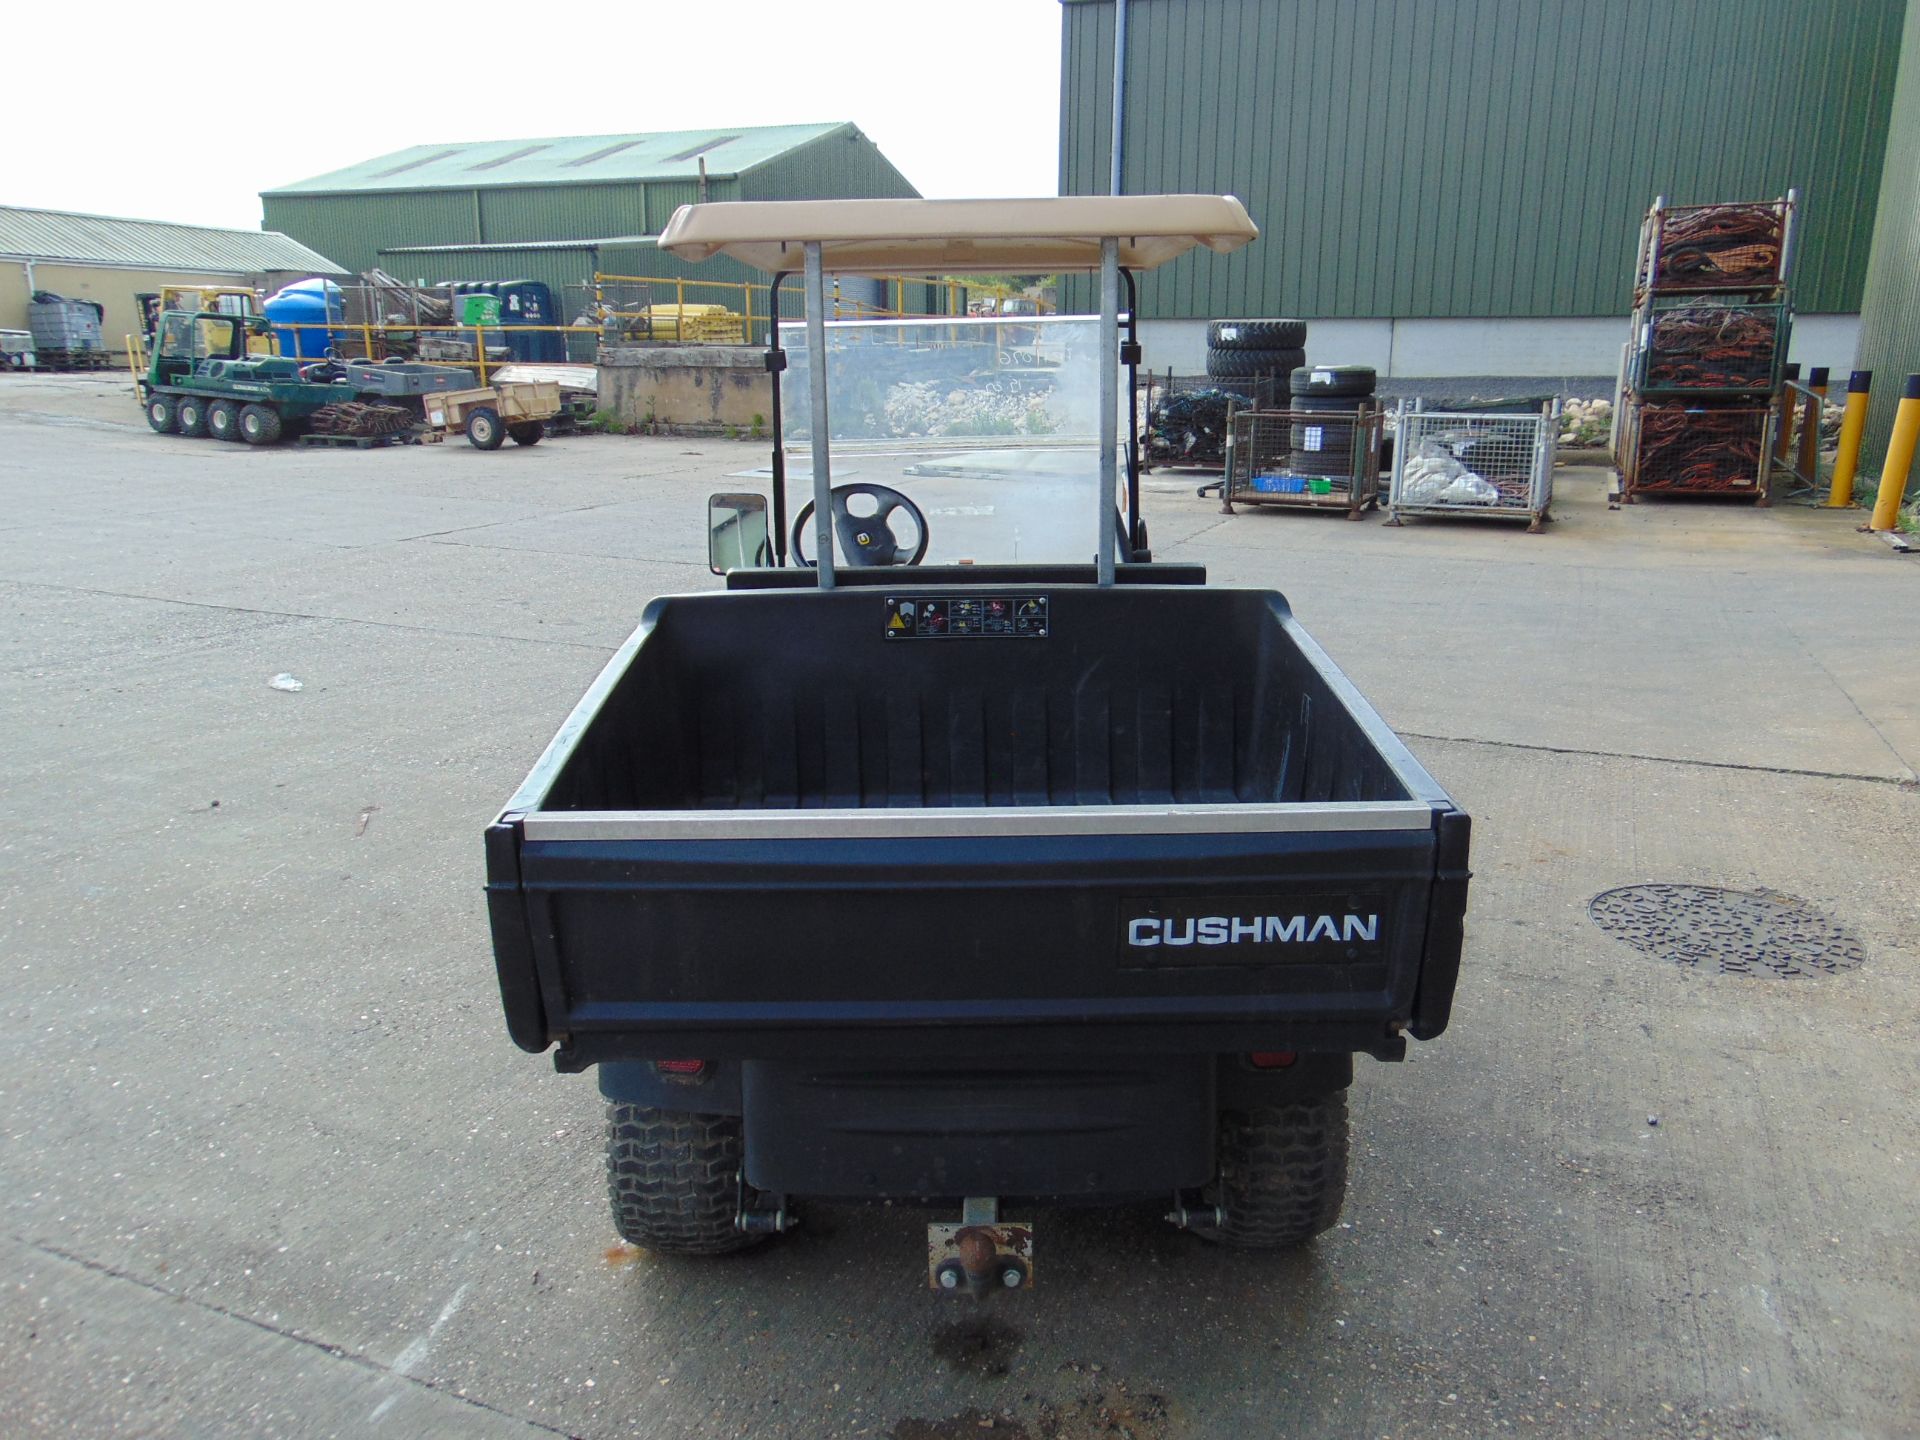 Cushman Hauler 1200 Petrol Utility Vehicle - Image 7 of 26